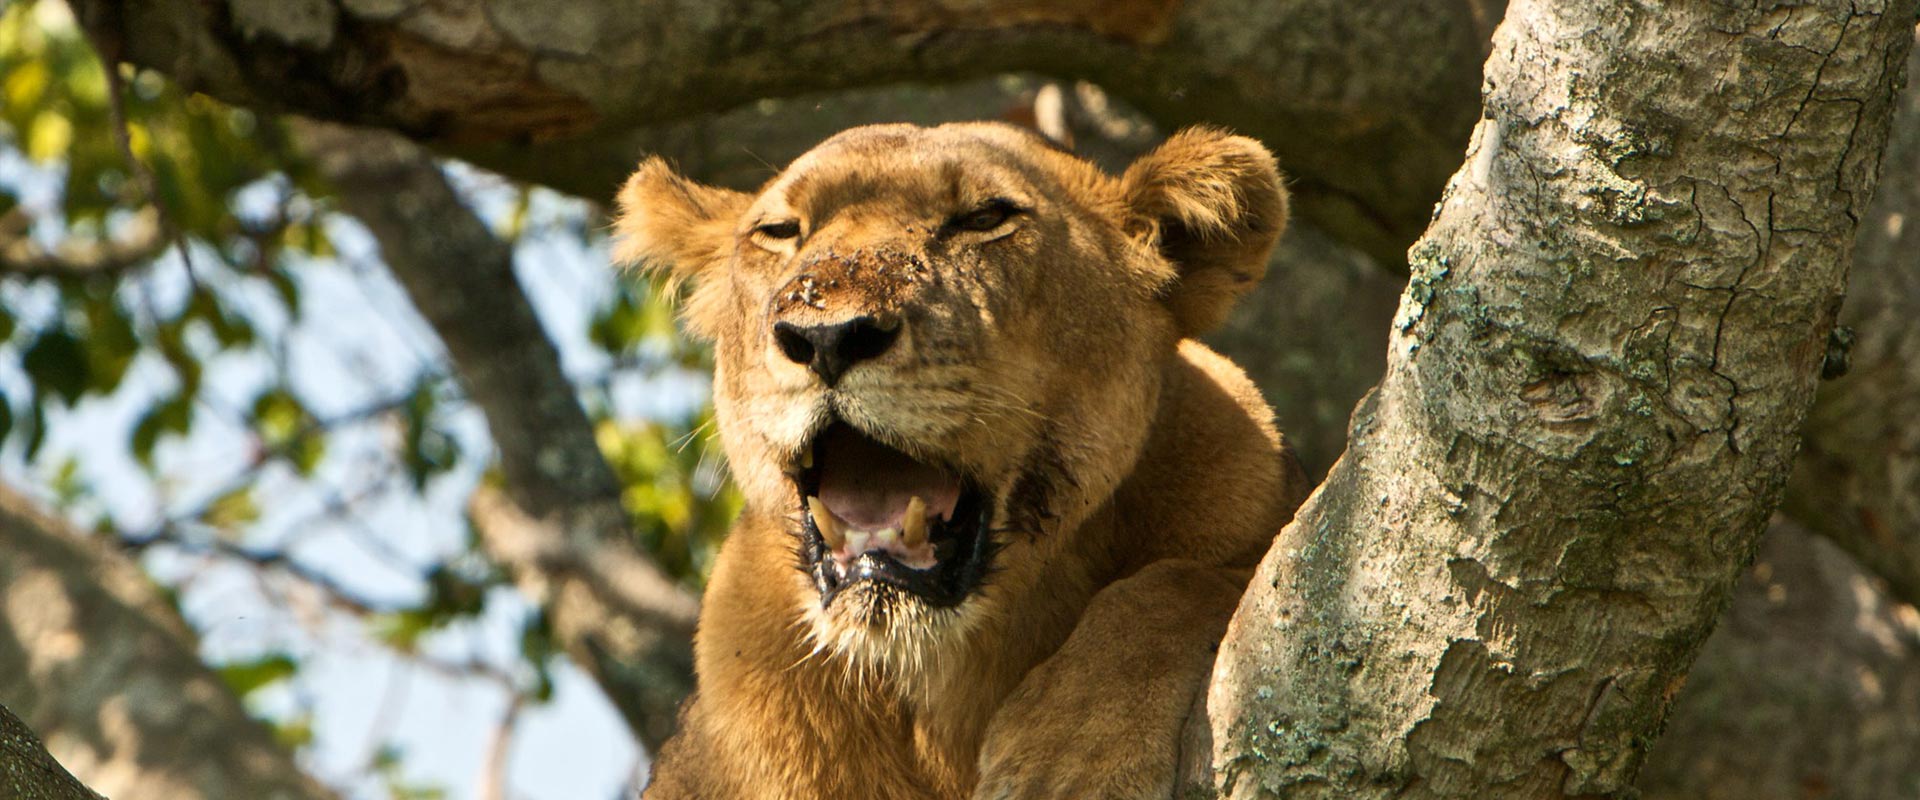 Tree climbing lions of Ishasha Queen elizabeth national park by Katsam Adventures Uganda